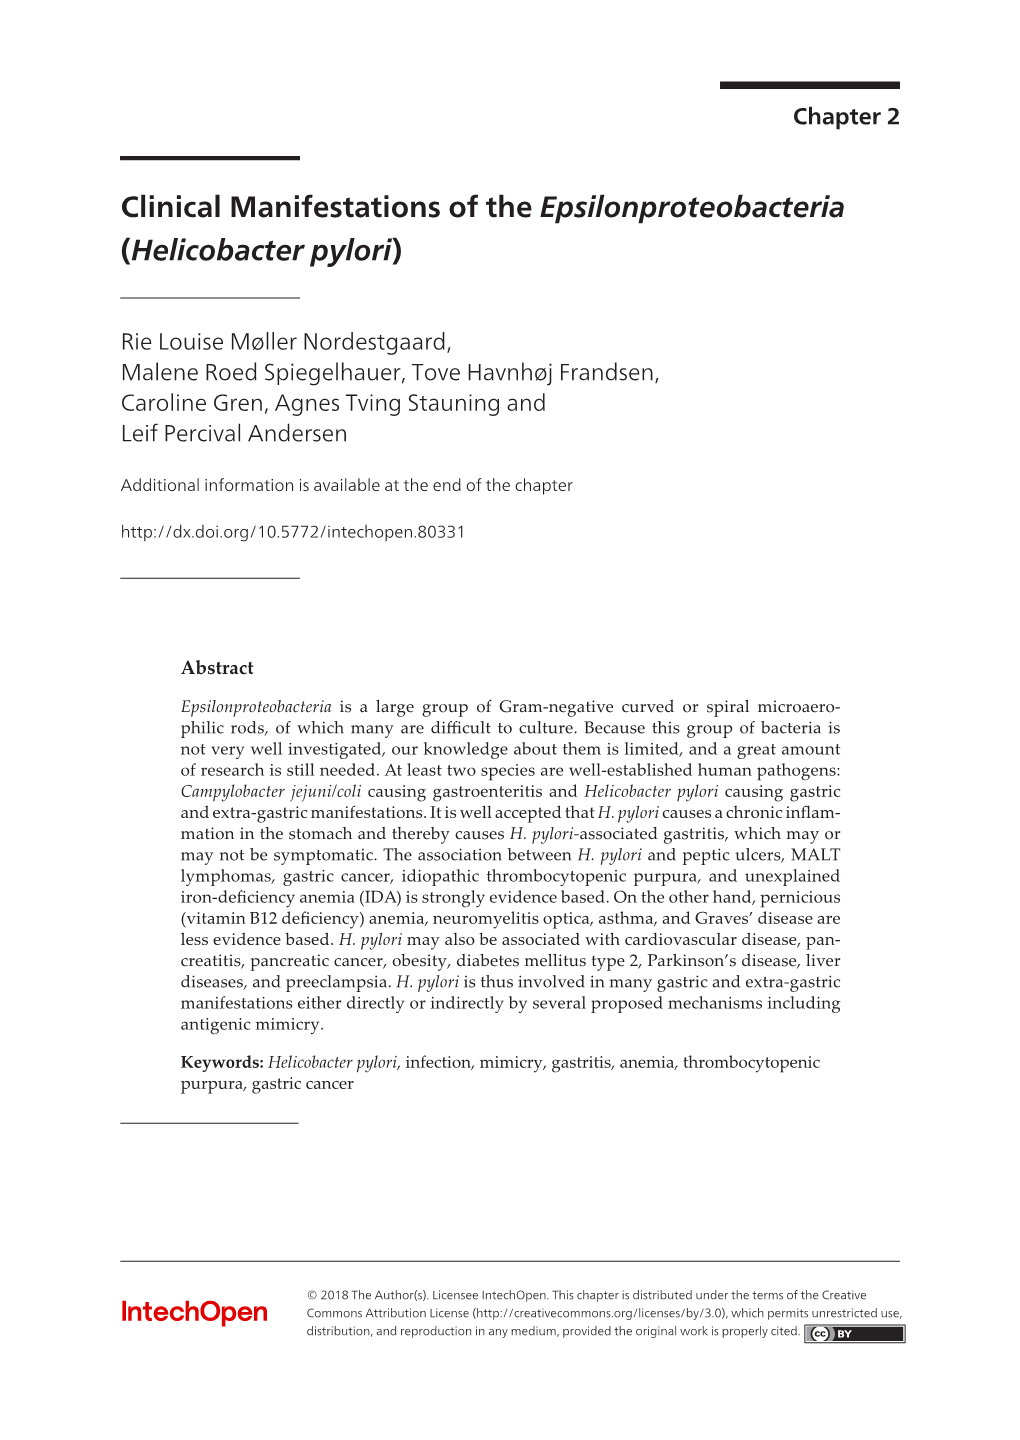 Clinical Manifestations of the Epsilonproteobacteria (Helicobacter Pylori)